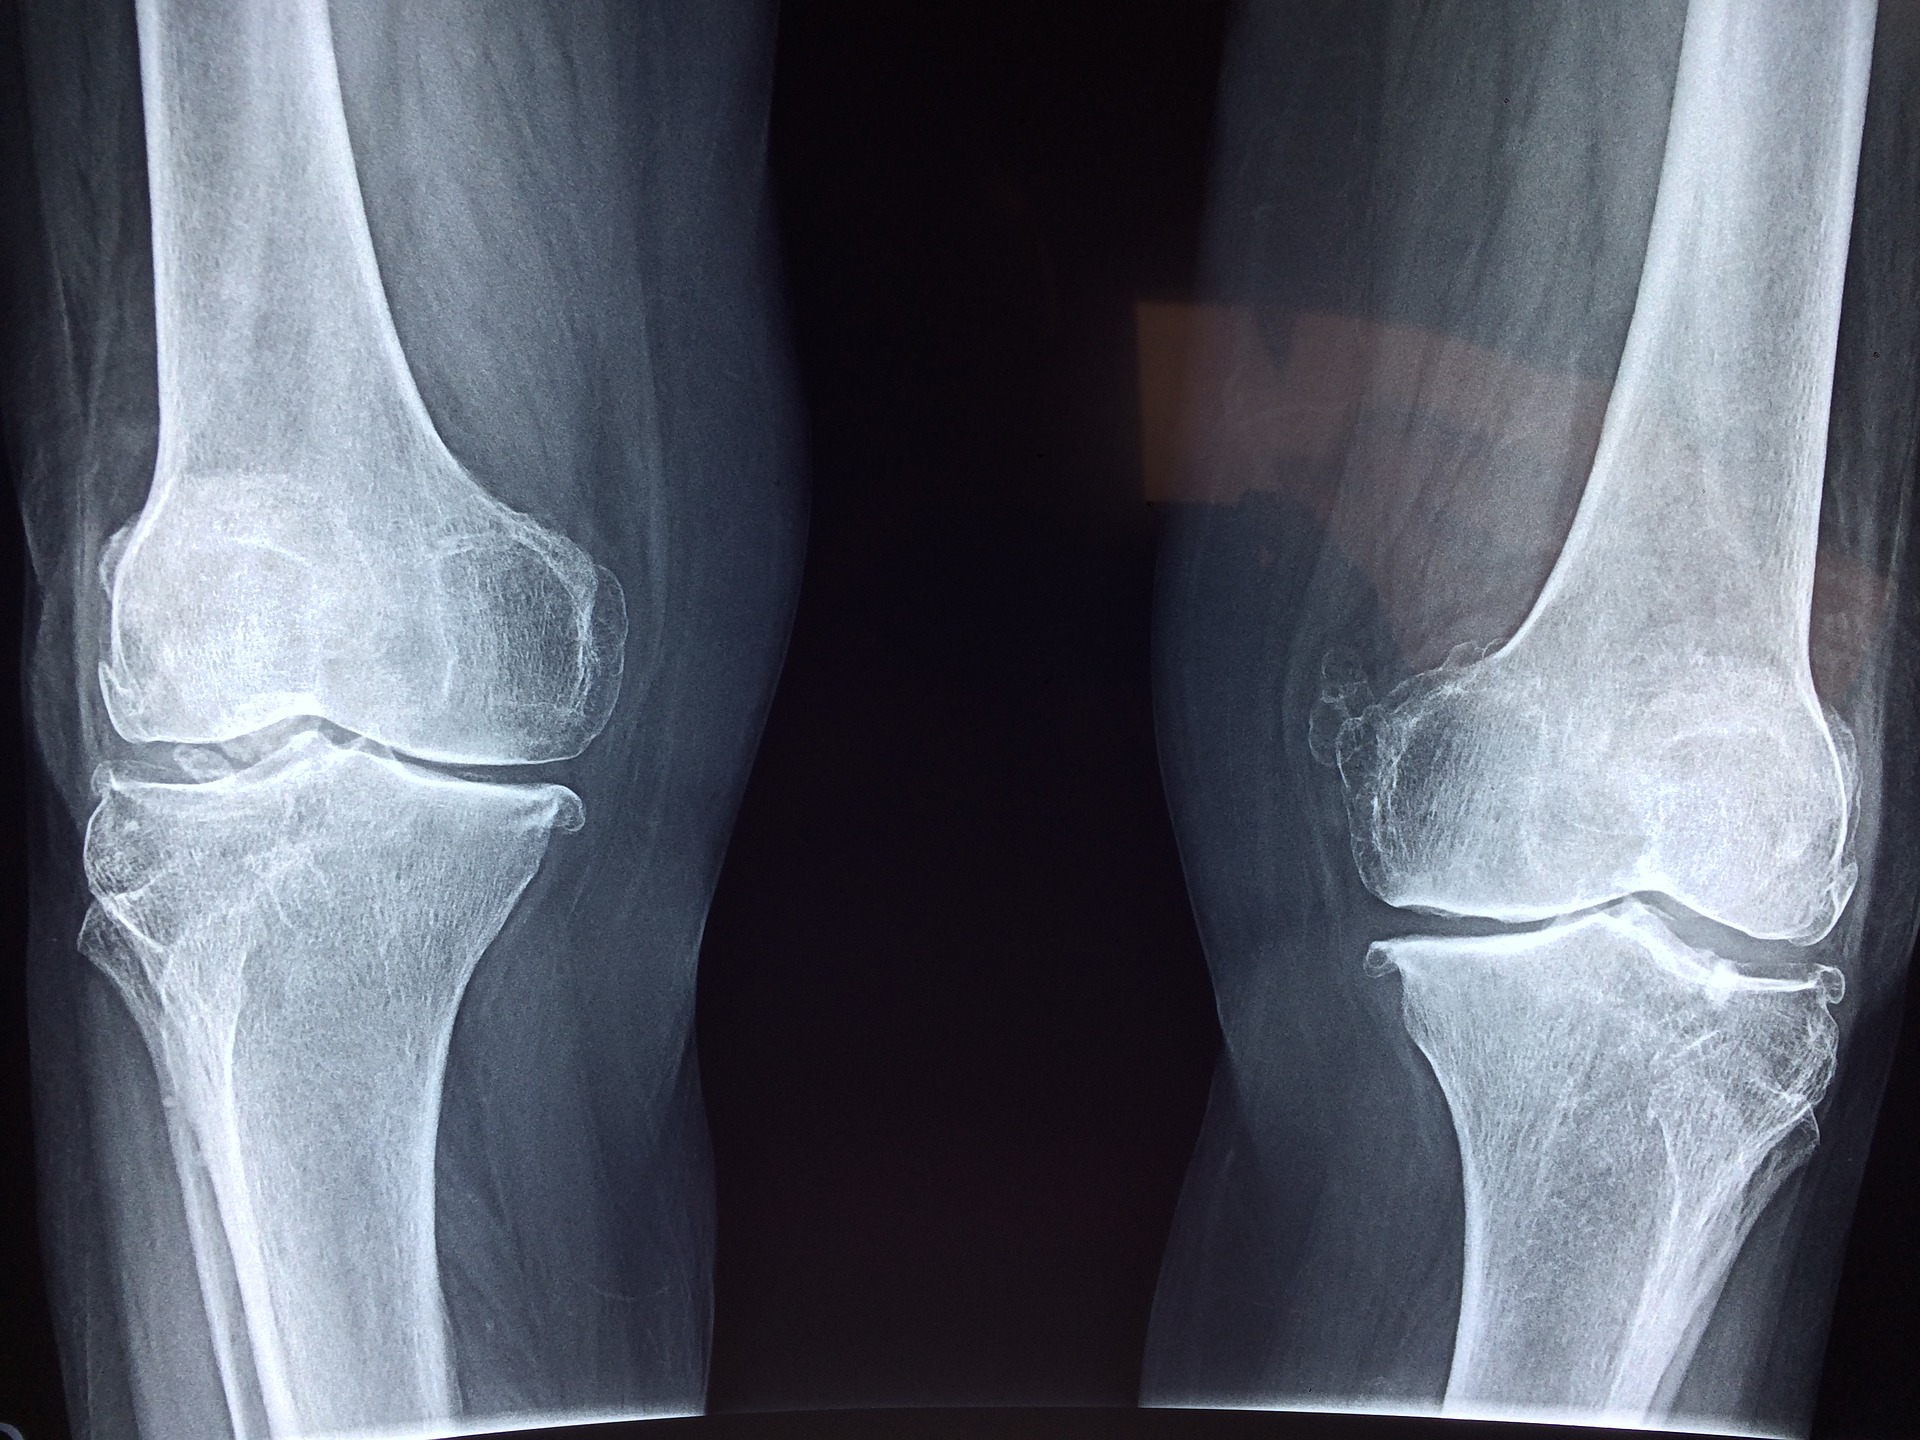 Xray of knees with osteoarthritis